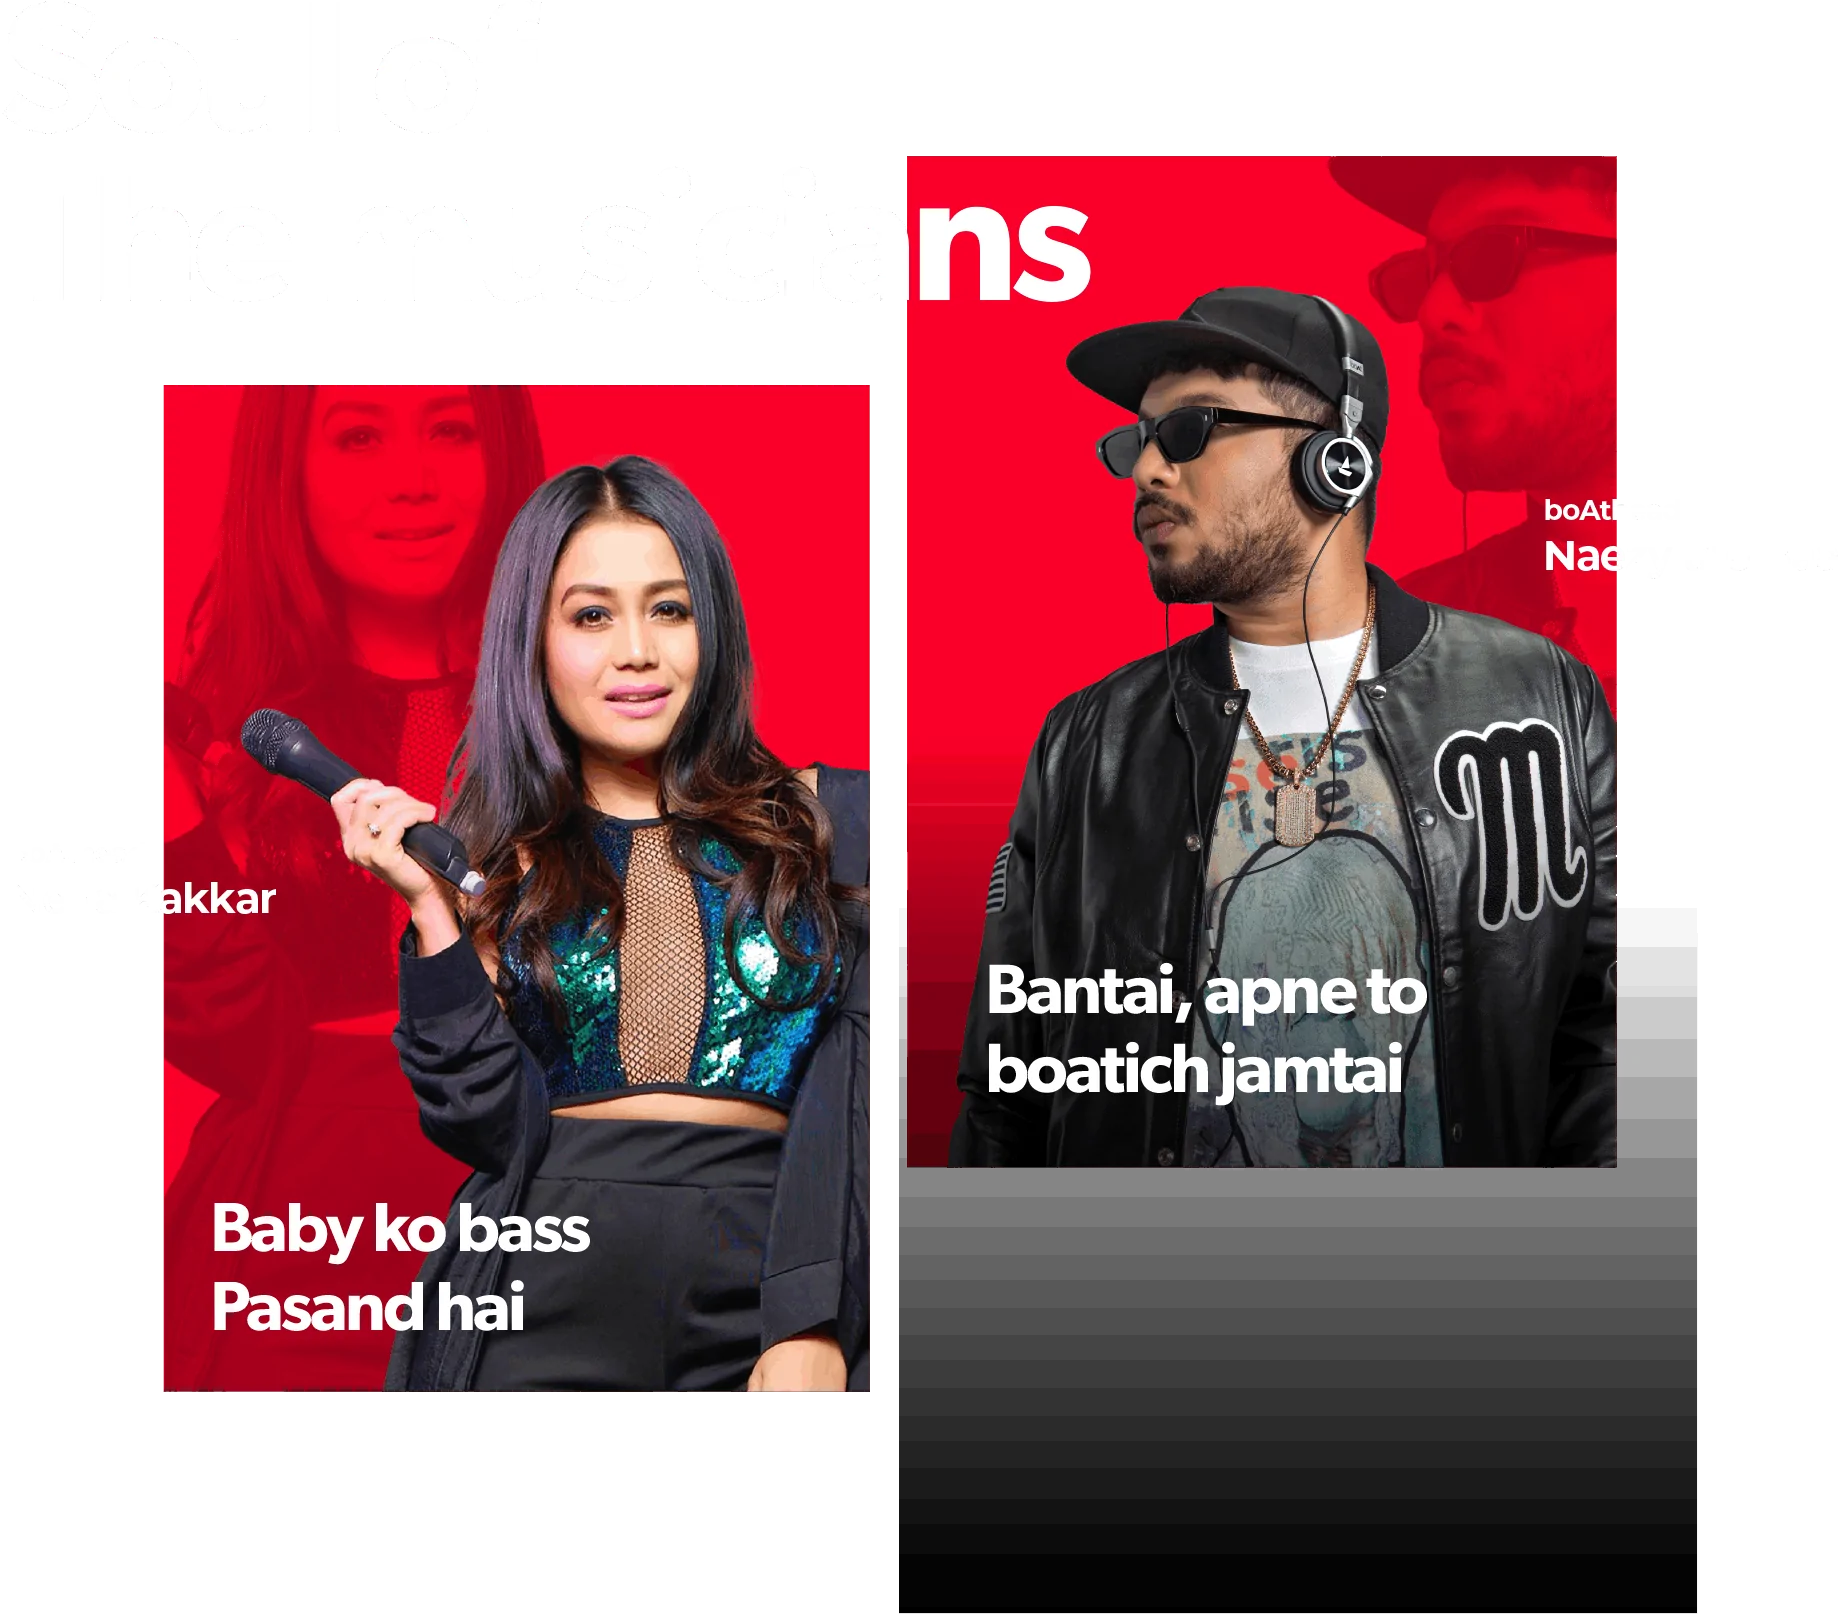 This image showcases singer Neha Kakkar and rapper Bantai collaborating with Boat